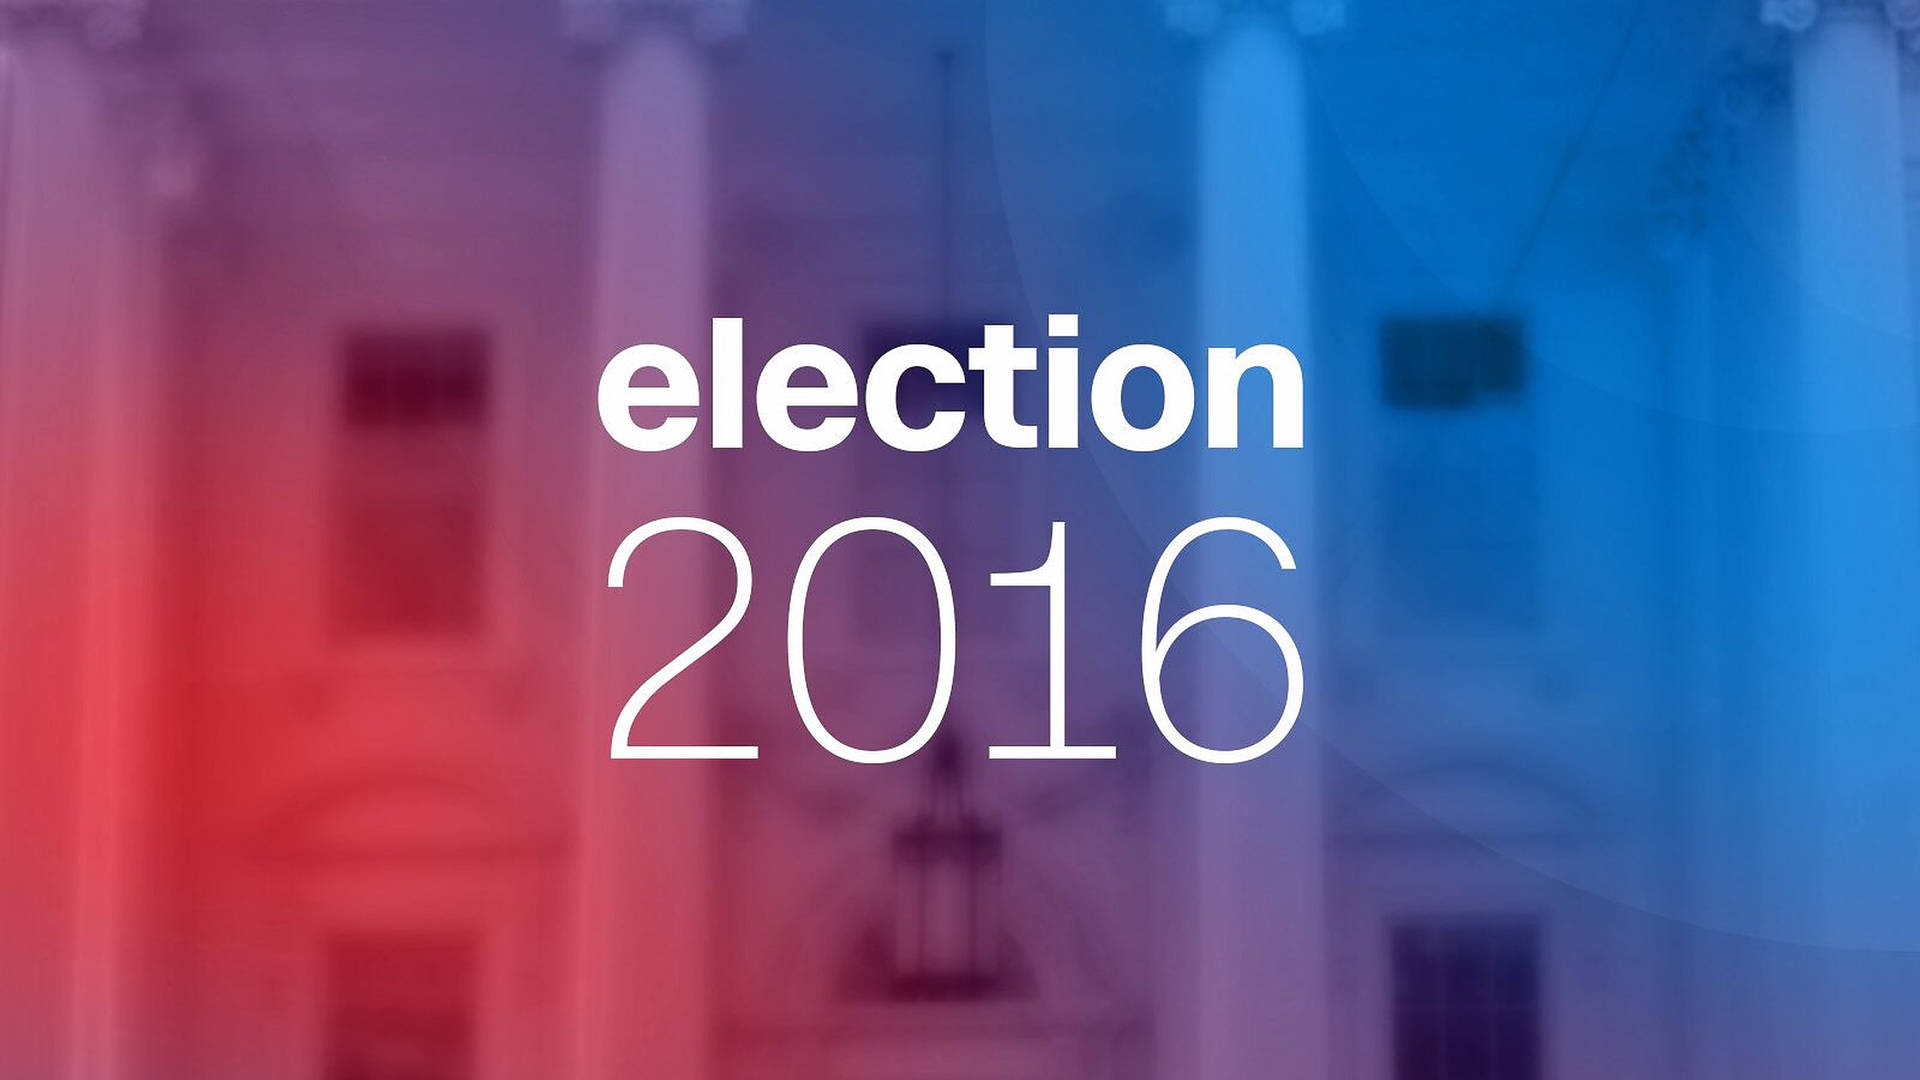 Spirited 2016 Election Scene Background